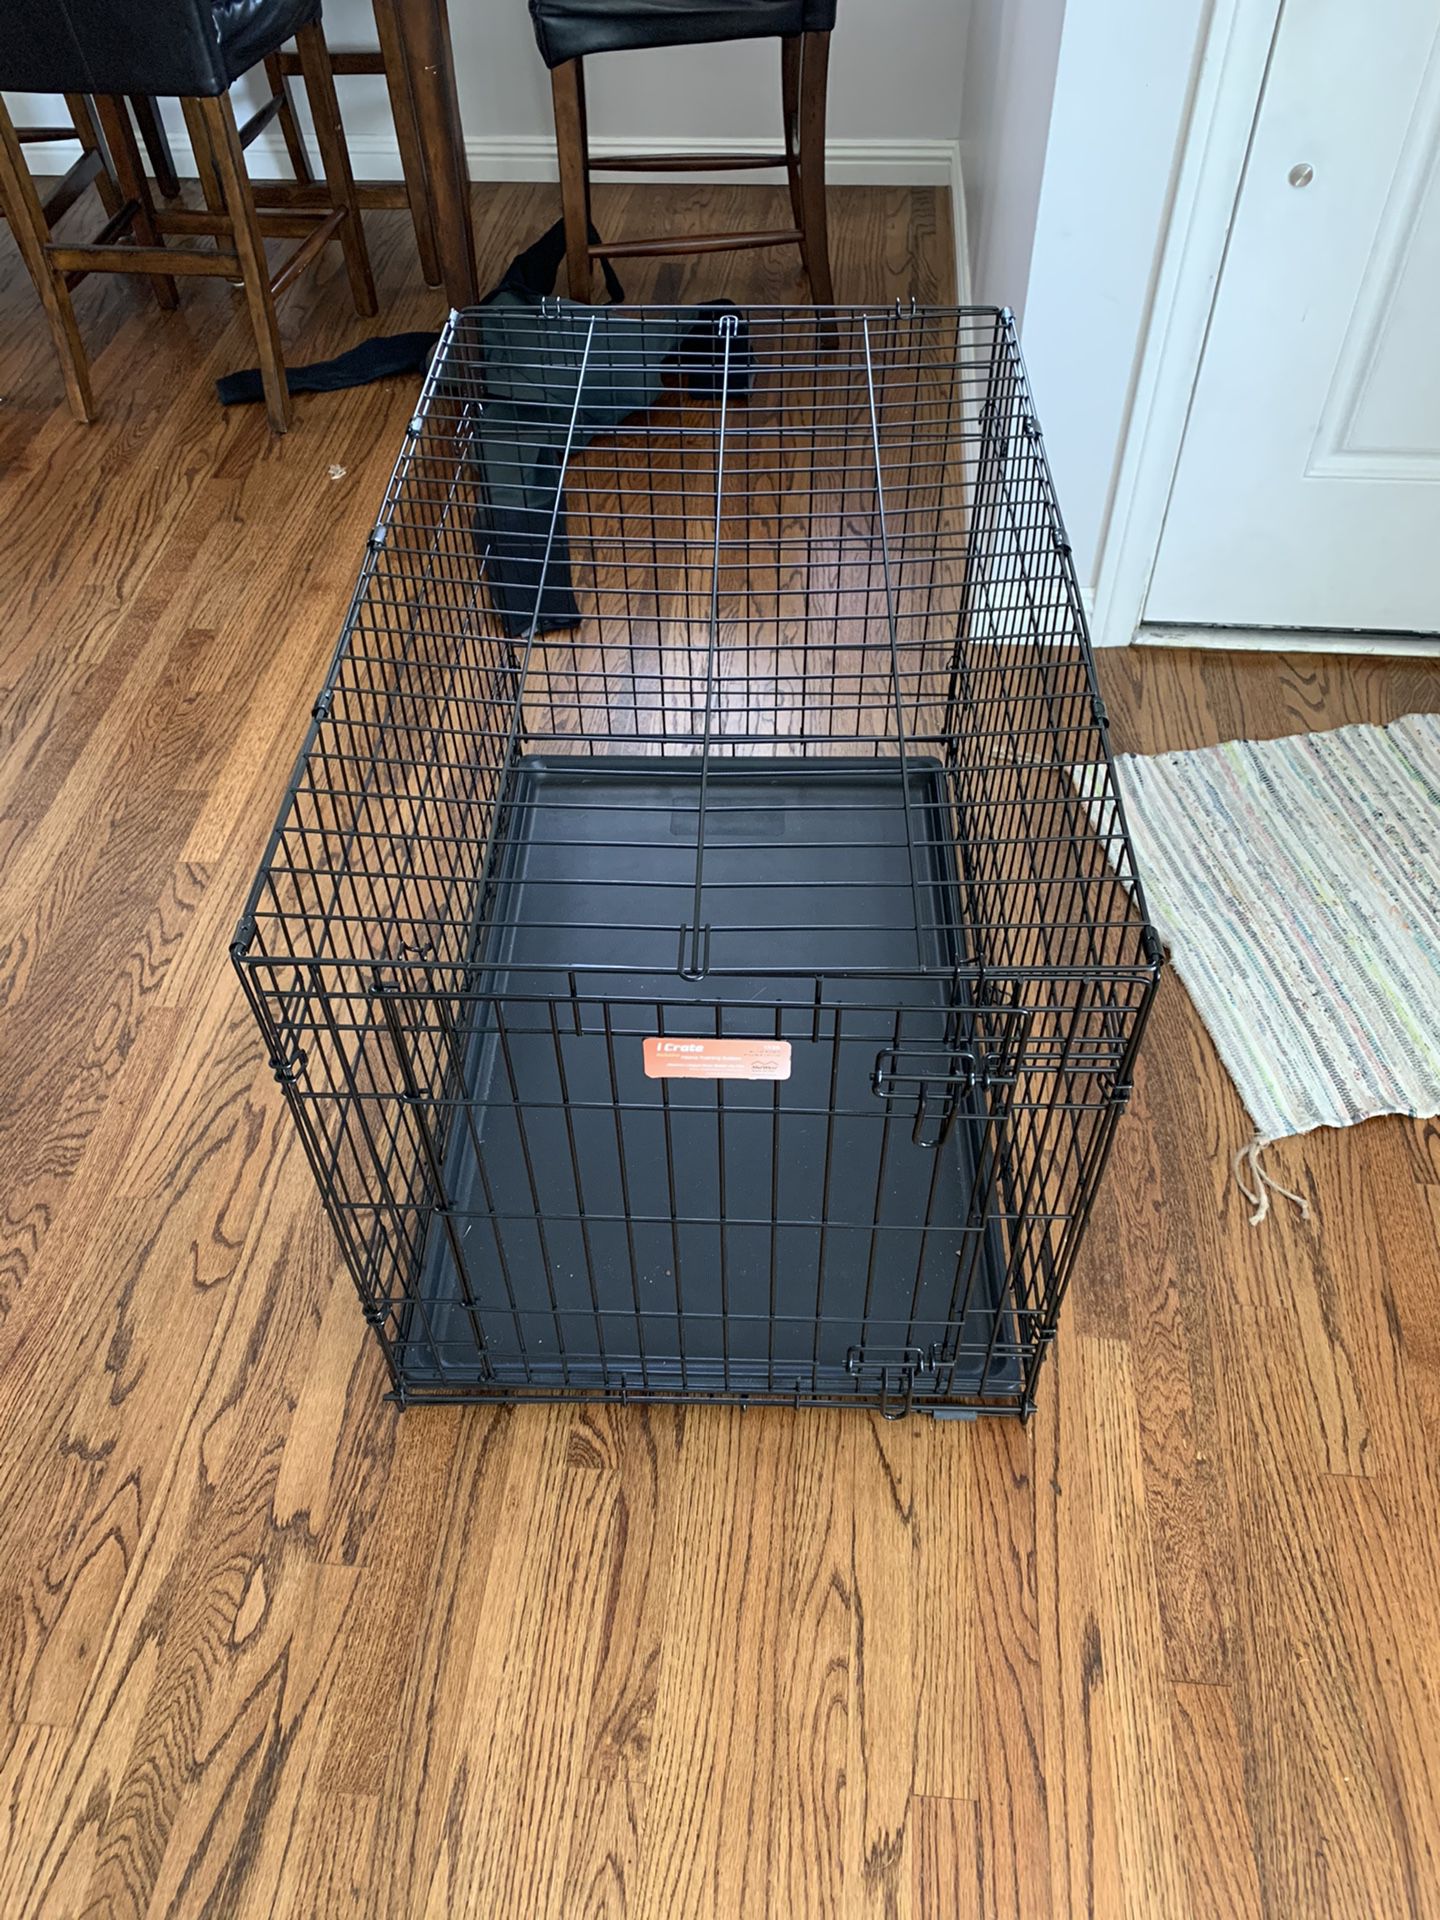 36” dog crate